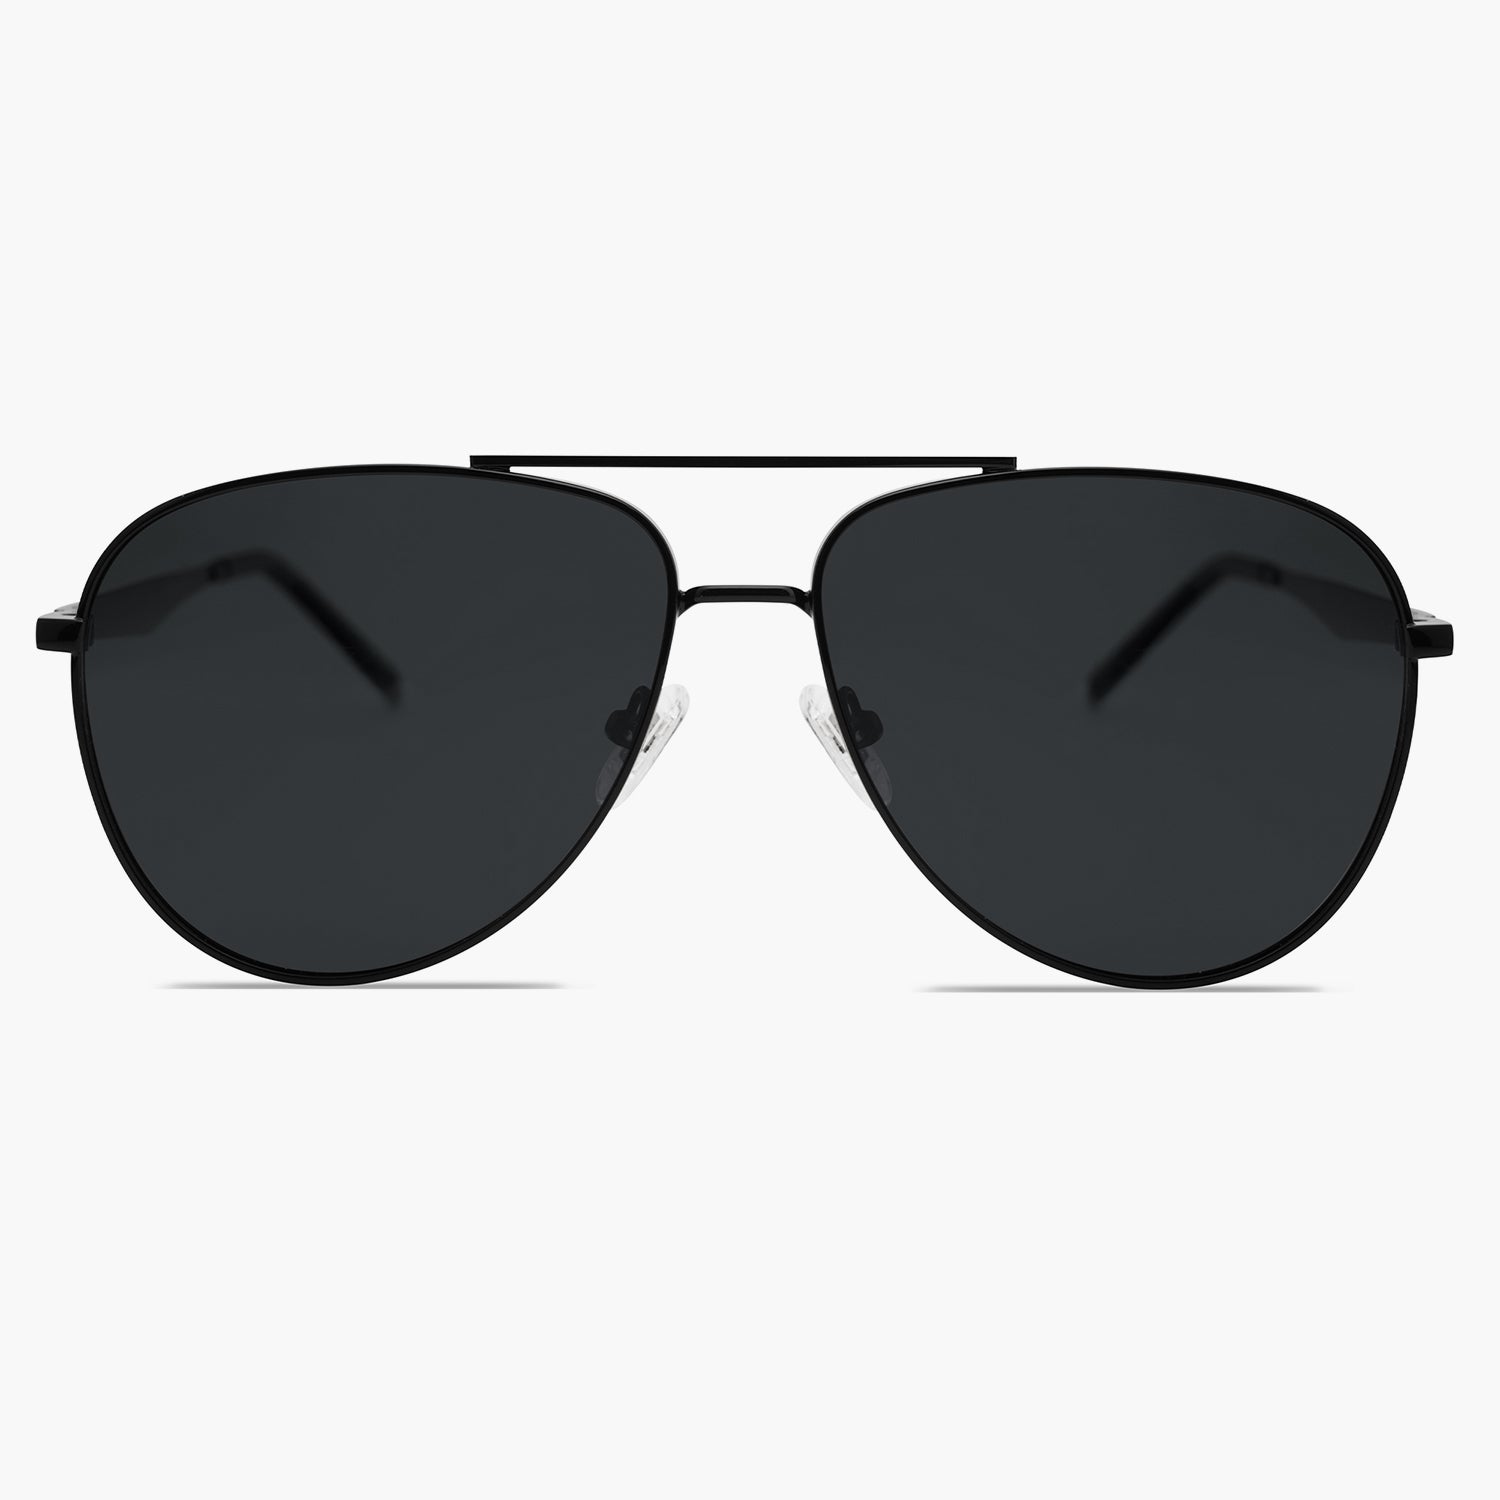 Buy Blue Sunglasses for Men by Idee Online | Ajio.com